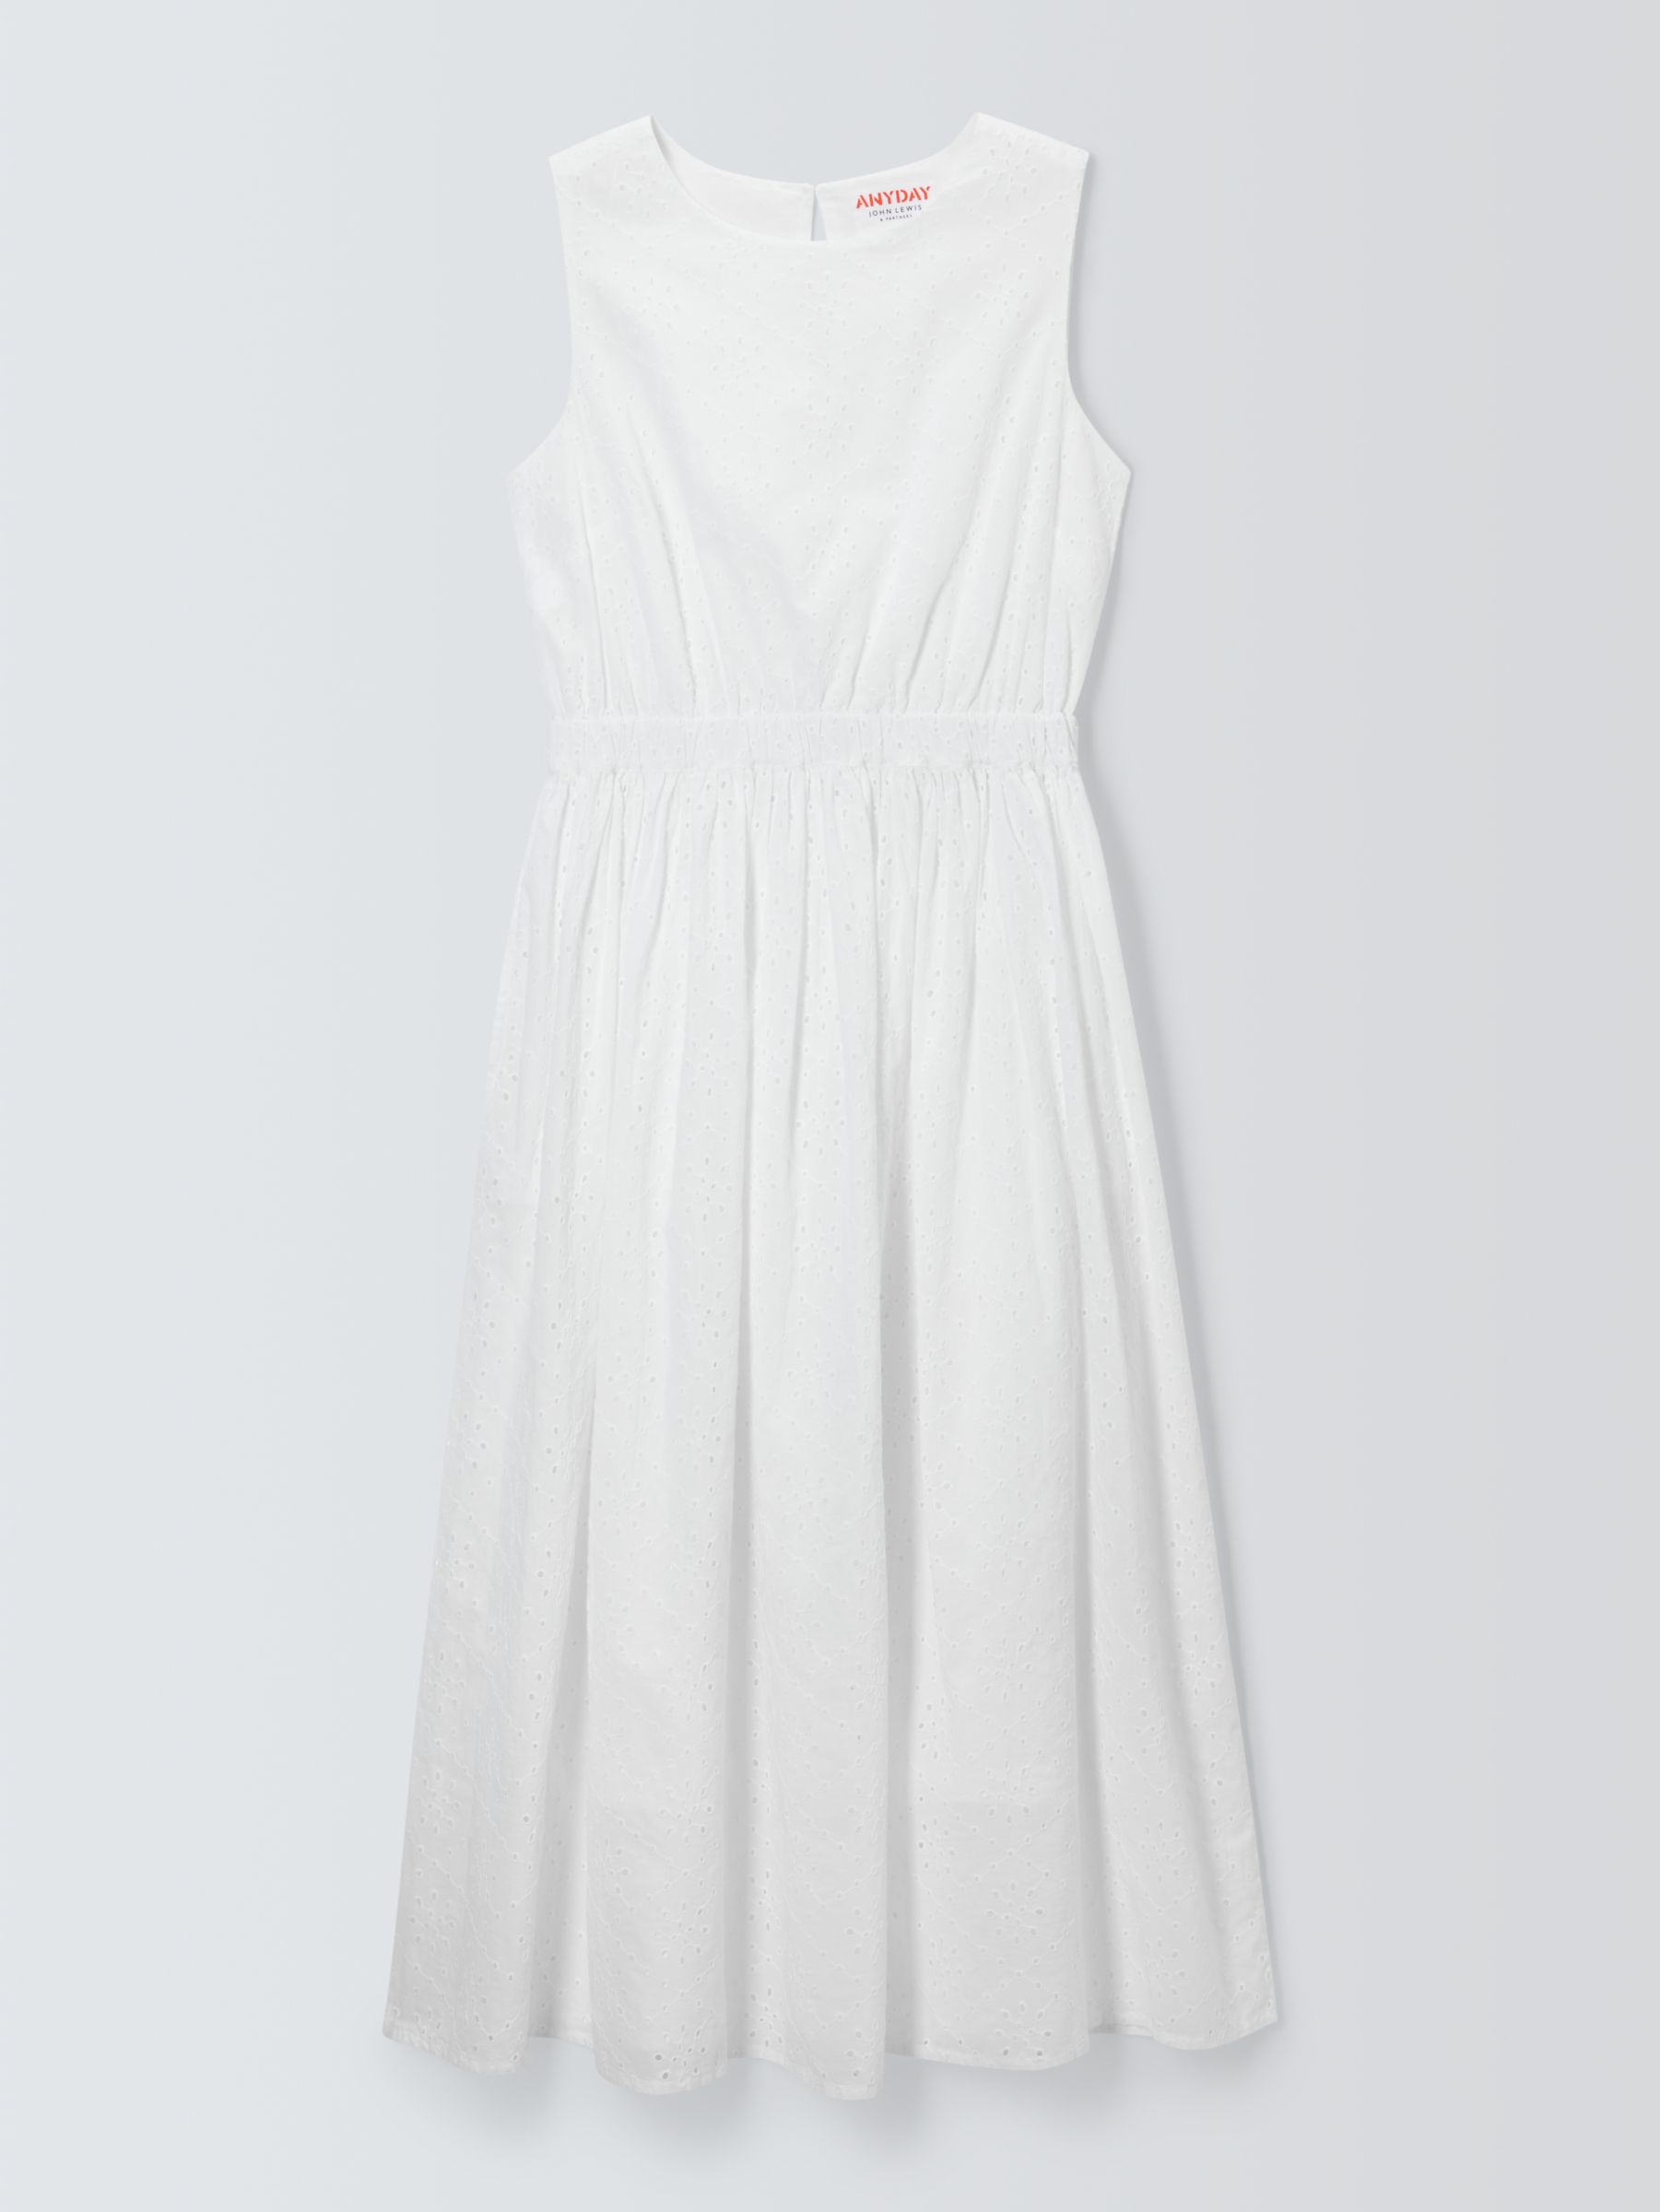 Buy John Lewis ANYDAY Broderie Dress Online at johnlewis.com